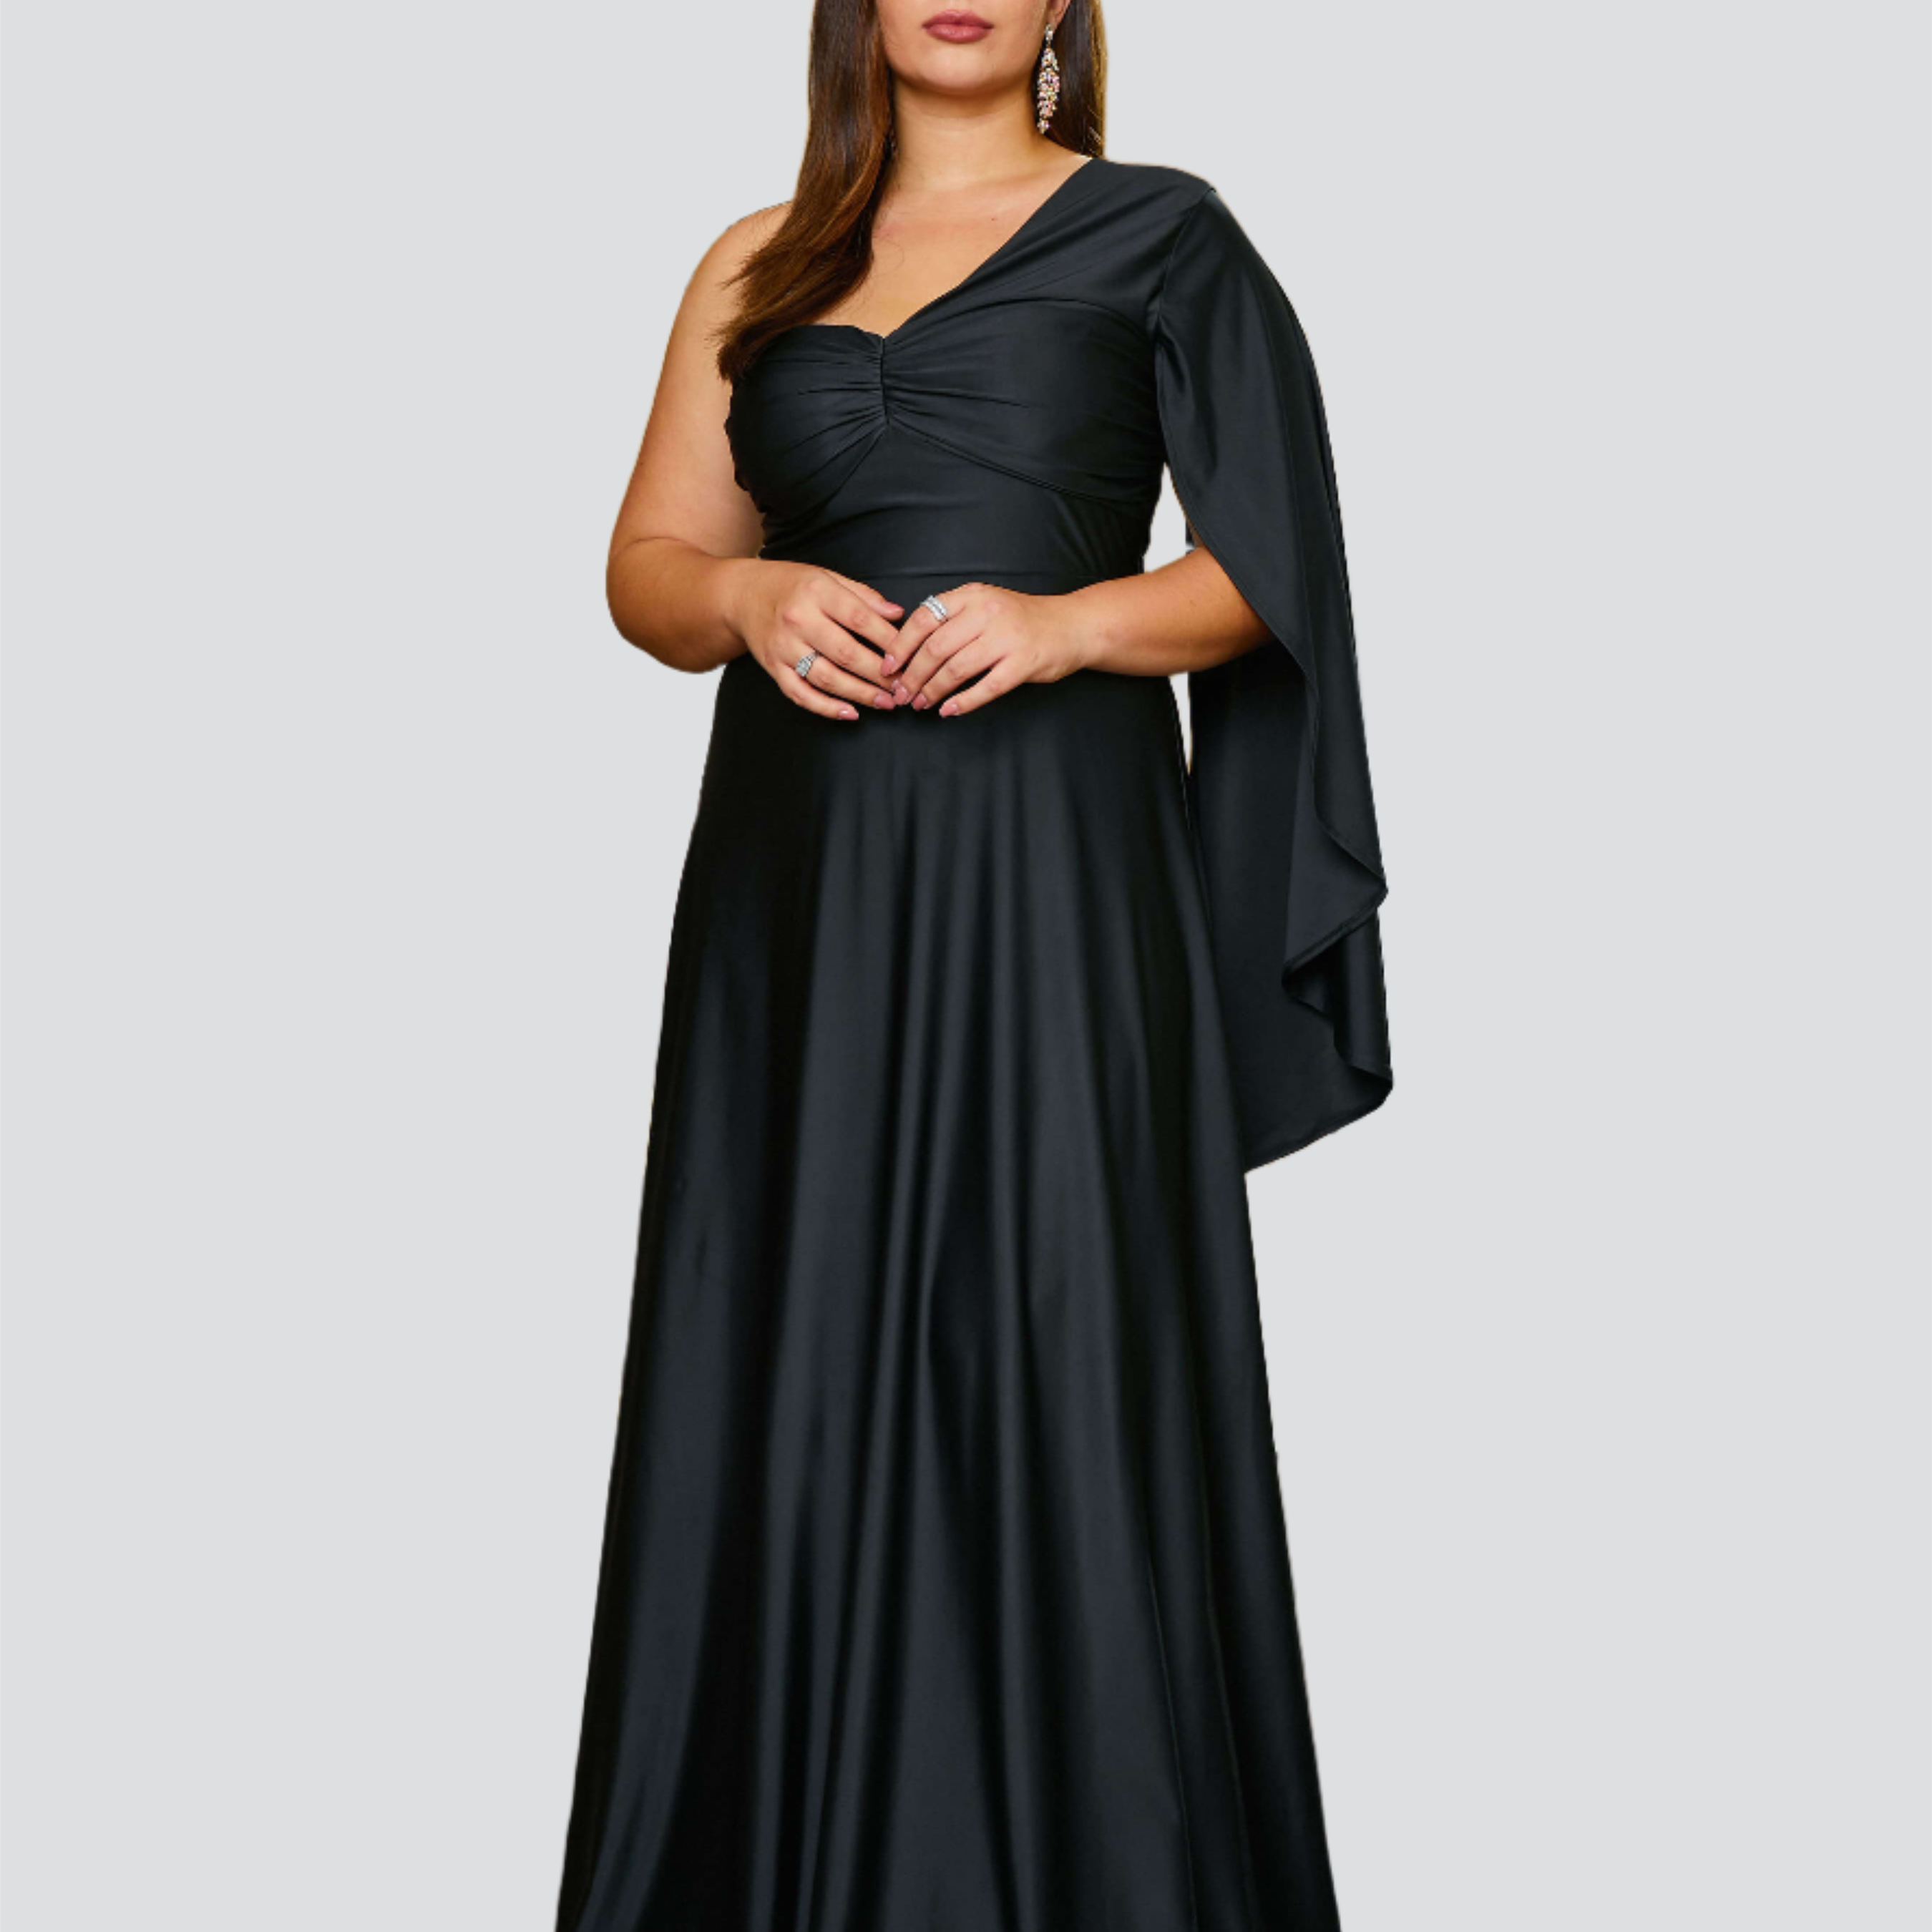 Plus Size One Shoulder A-Line Black Prom Dress